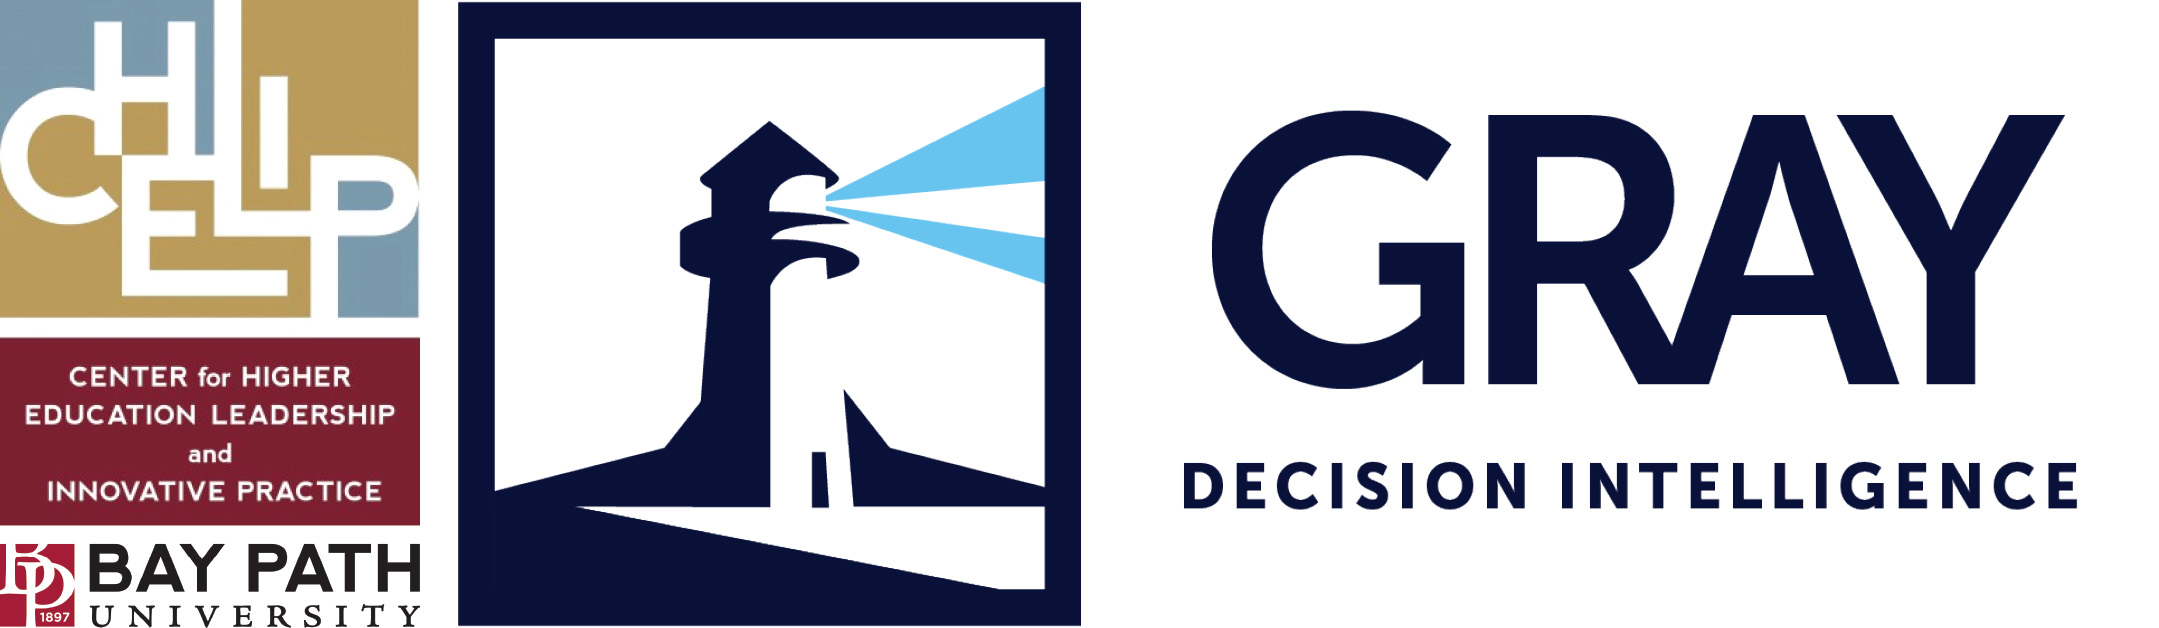 CHELIP and Gray Associates logo